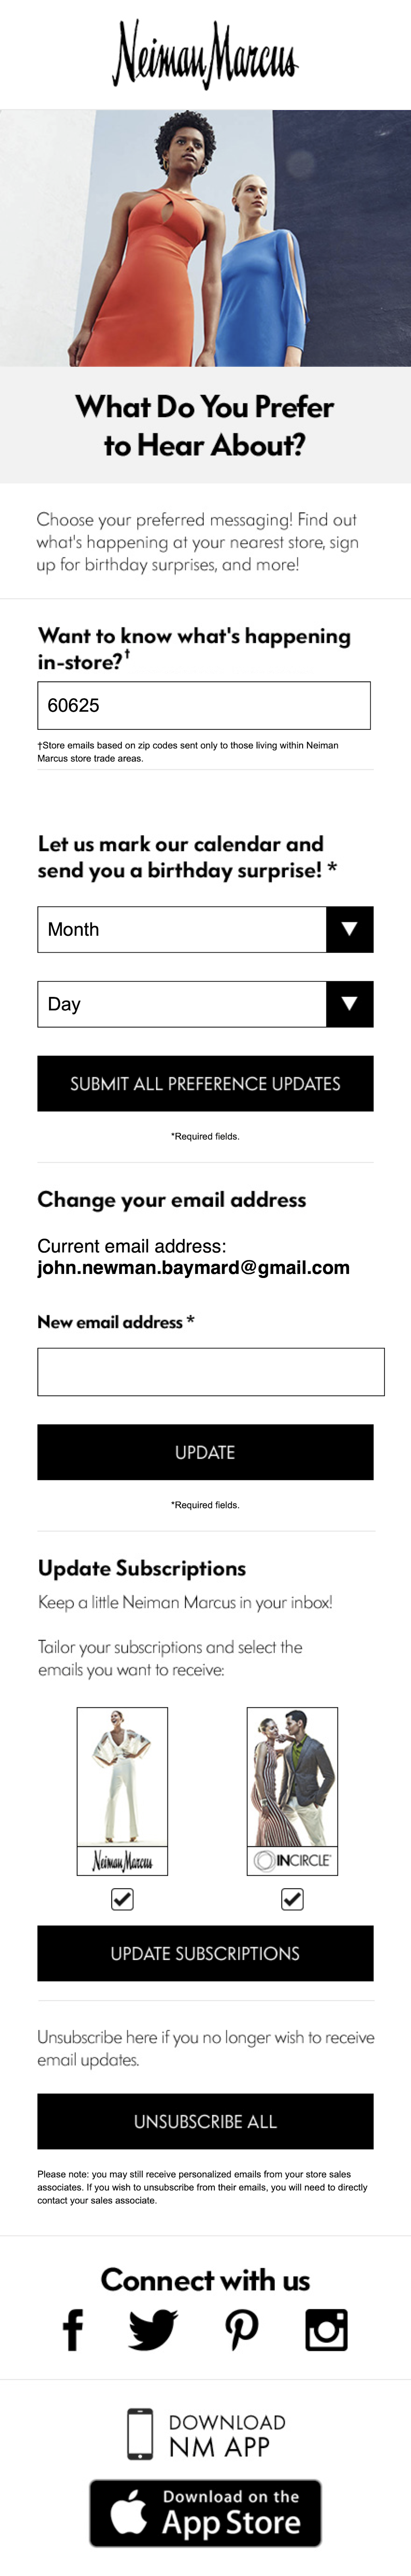 Mobile screenshot of Neiman Marcus